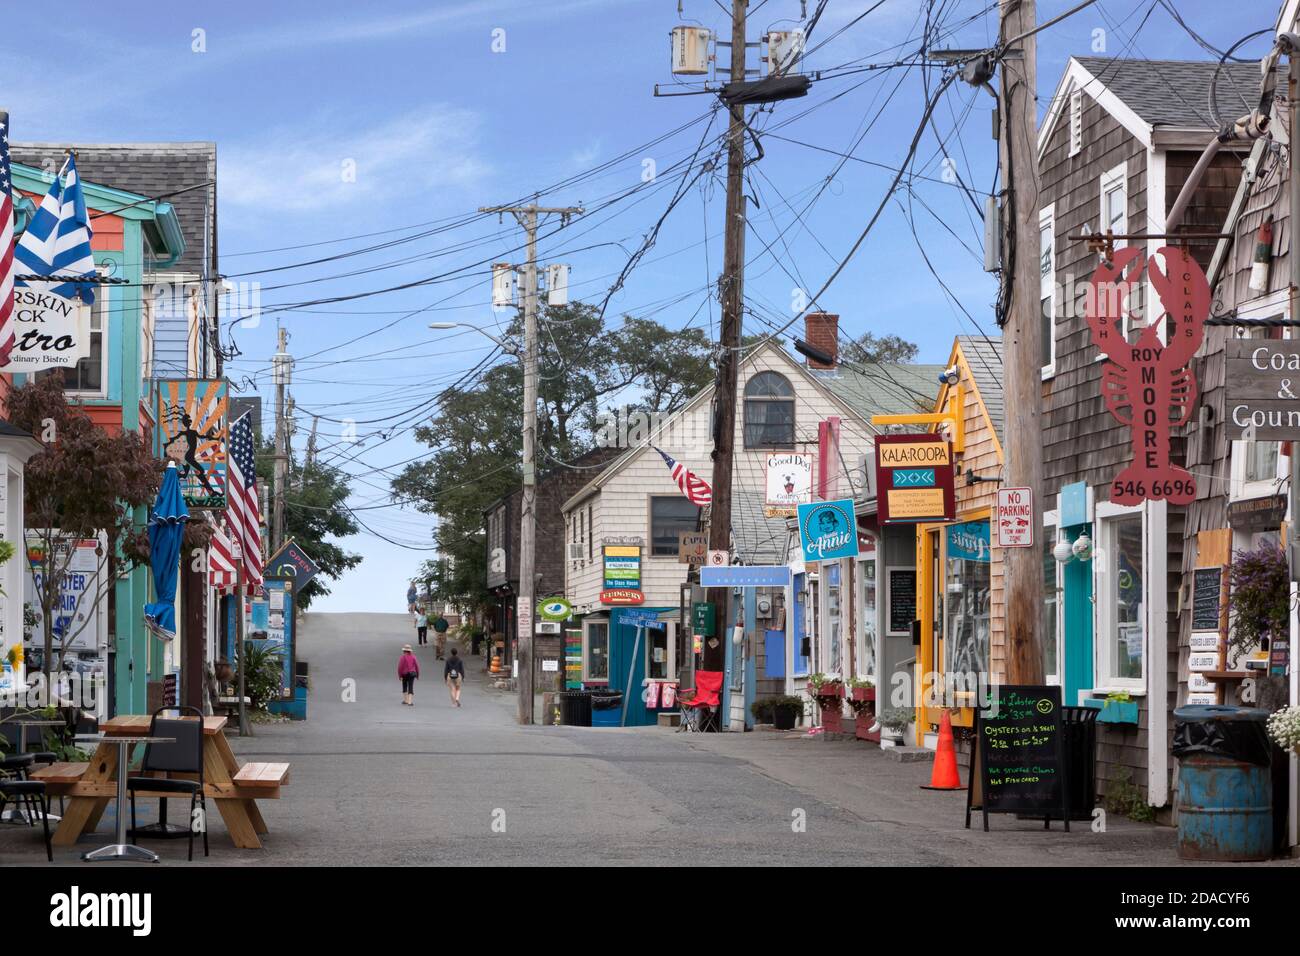 Shops along Bearskin Neck in Rockport, Massachusetts on Cape Ann (Essex County), United States. Stock Photo